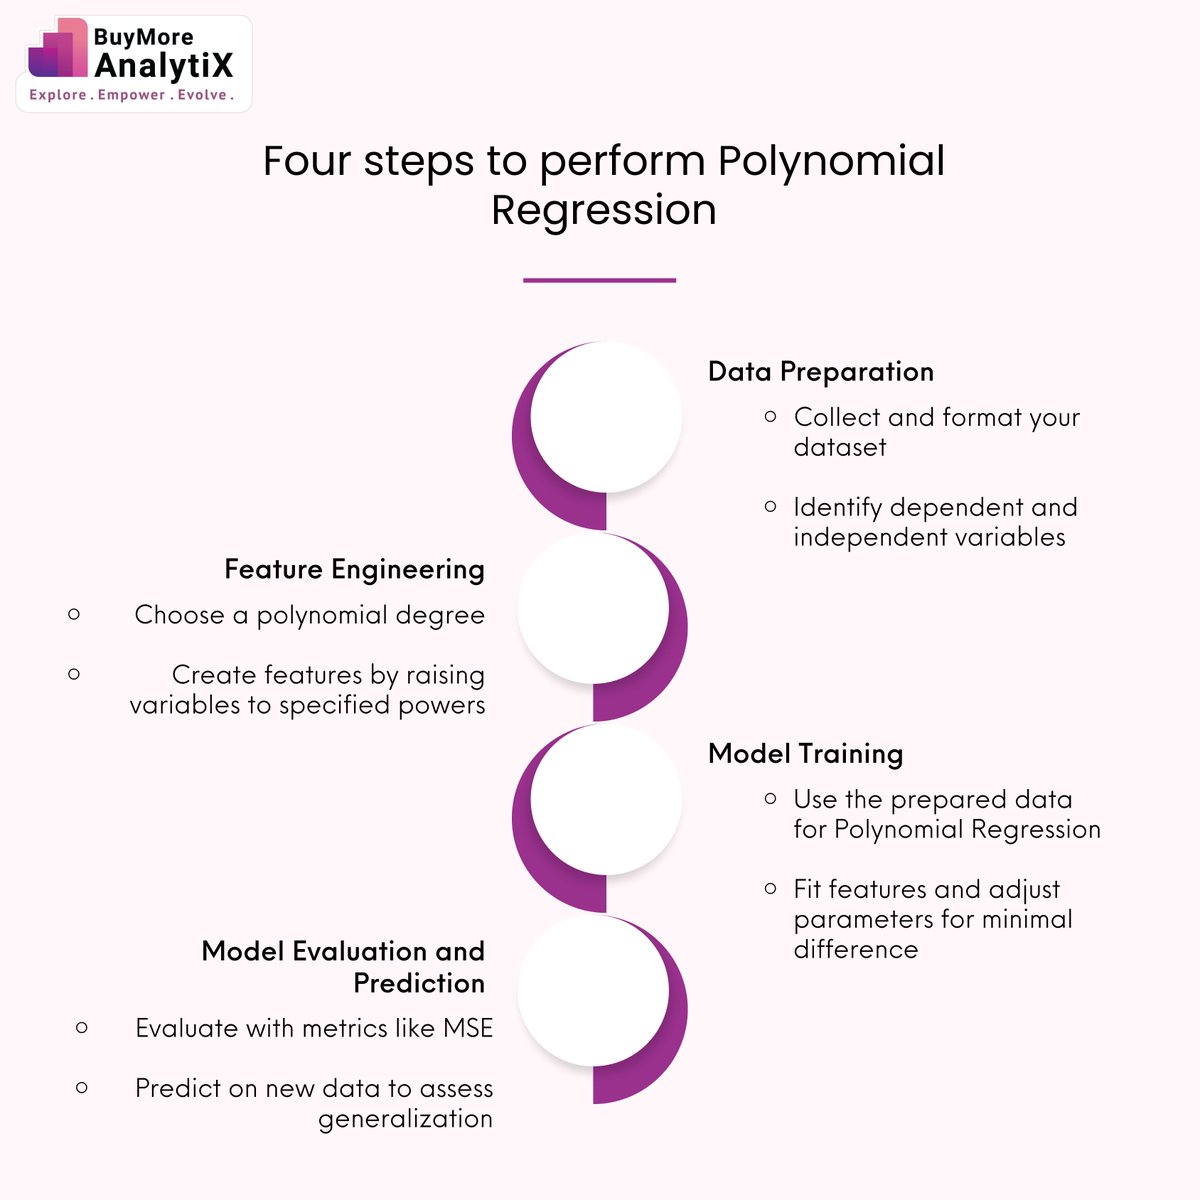 Four steps to perform Polynomial Regression! 📈

#DataPreparation #DataAnalytics #FeatureEngineering #PolynomialRegression #ModelTraining #ModelEvaluation #DataFormatting #MachineLearning #AI #RegressionAnalysis #DataScience #PredictiveModeling #DataAnalysis #BuymoreAnalytix